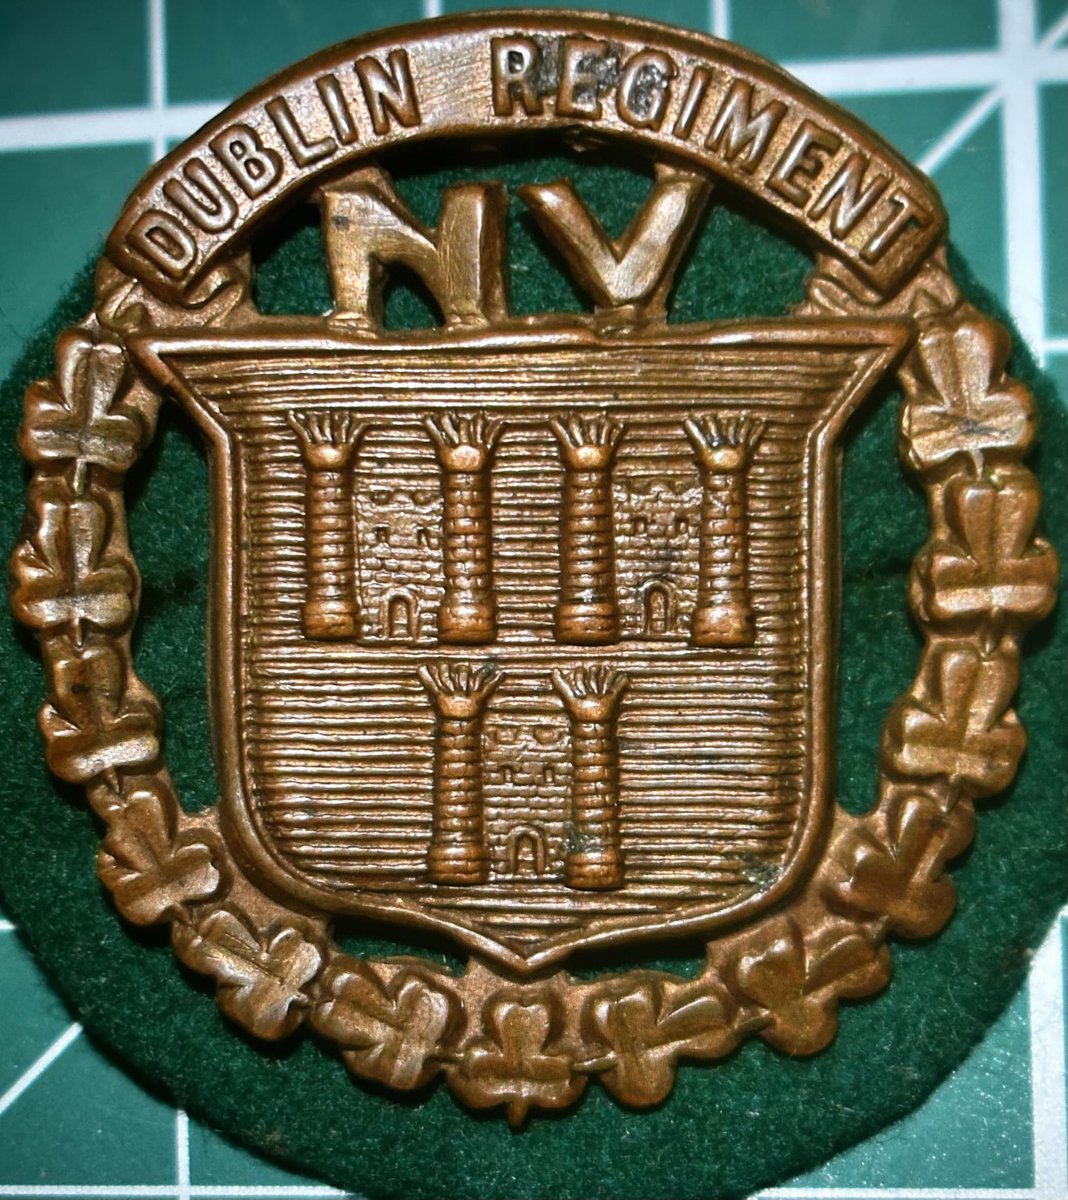 Dublin Regiment National Volunteers cap badge, circa 1914.